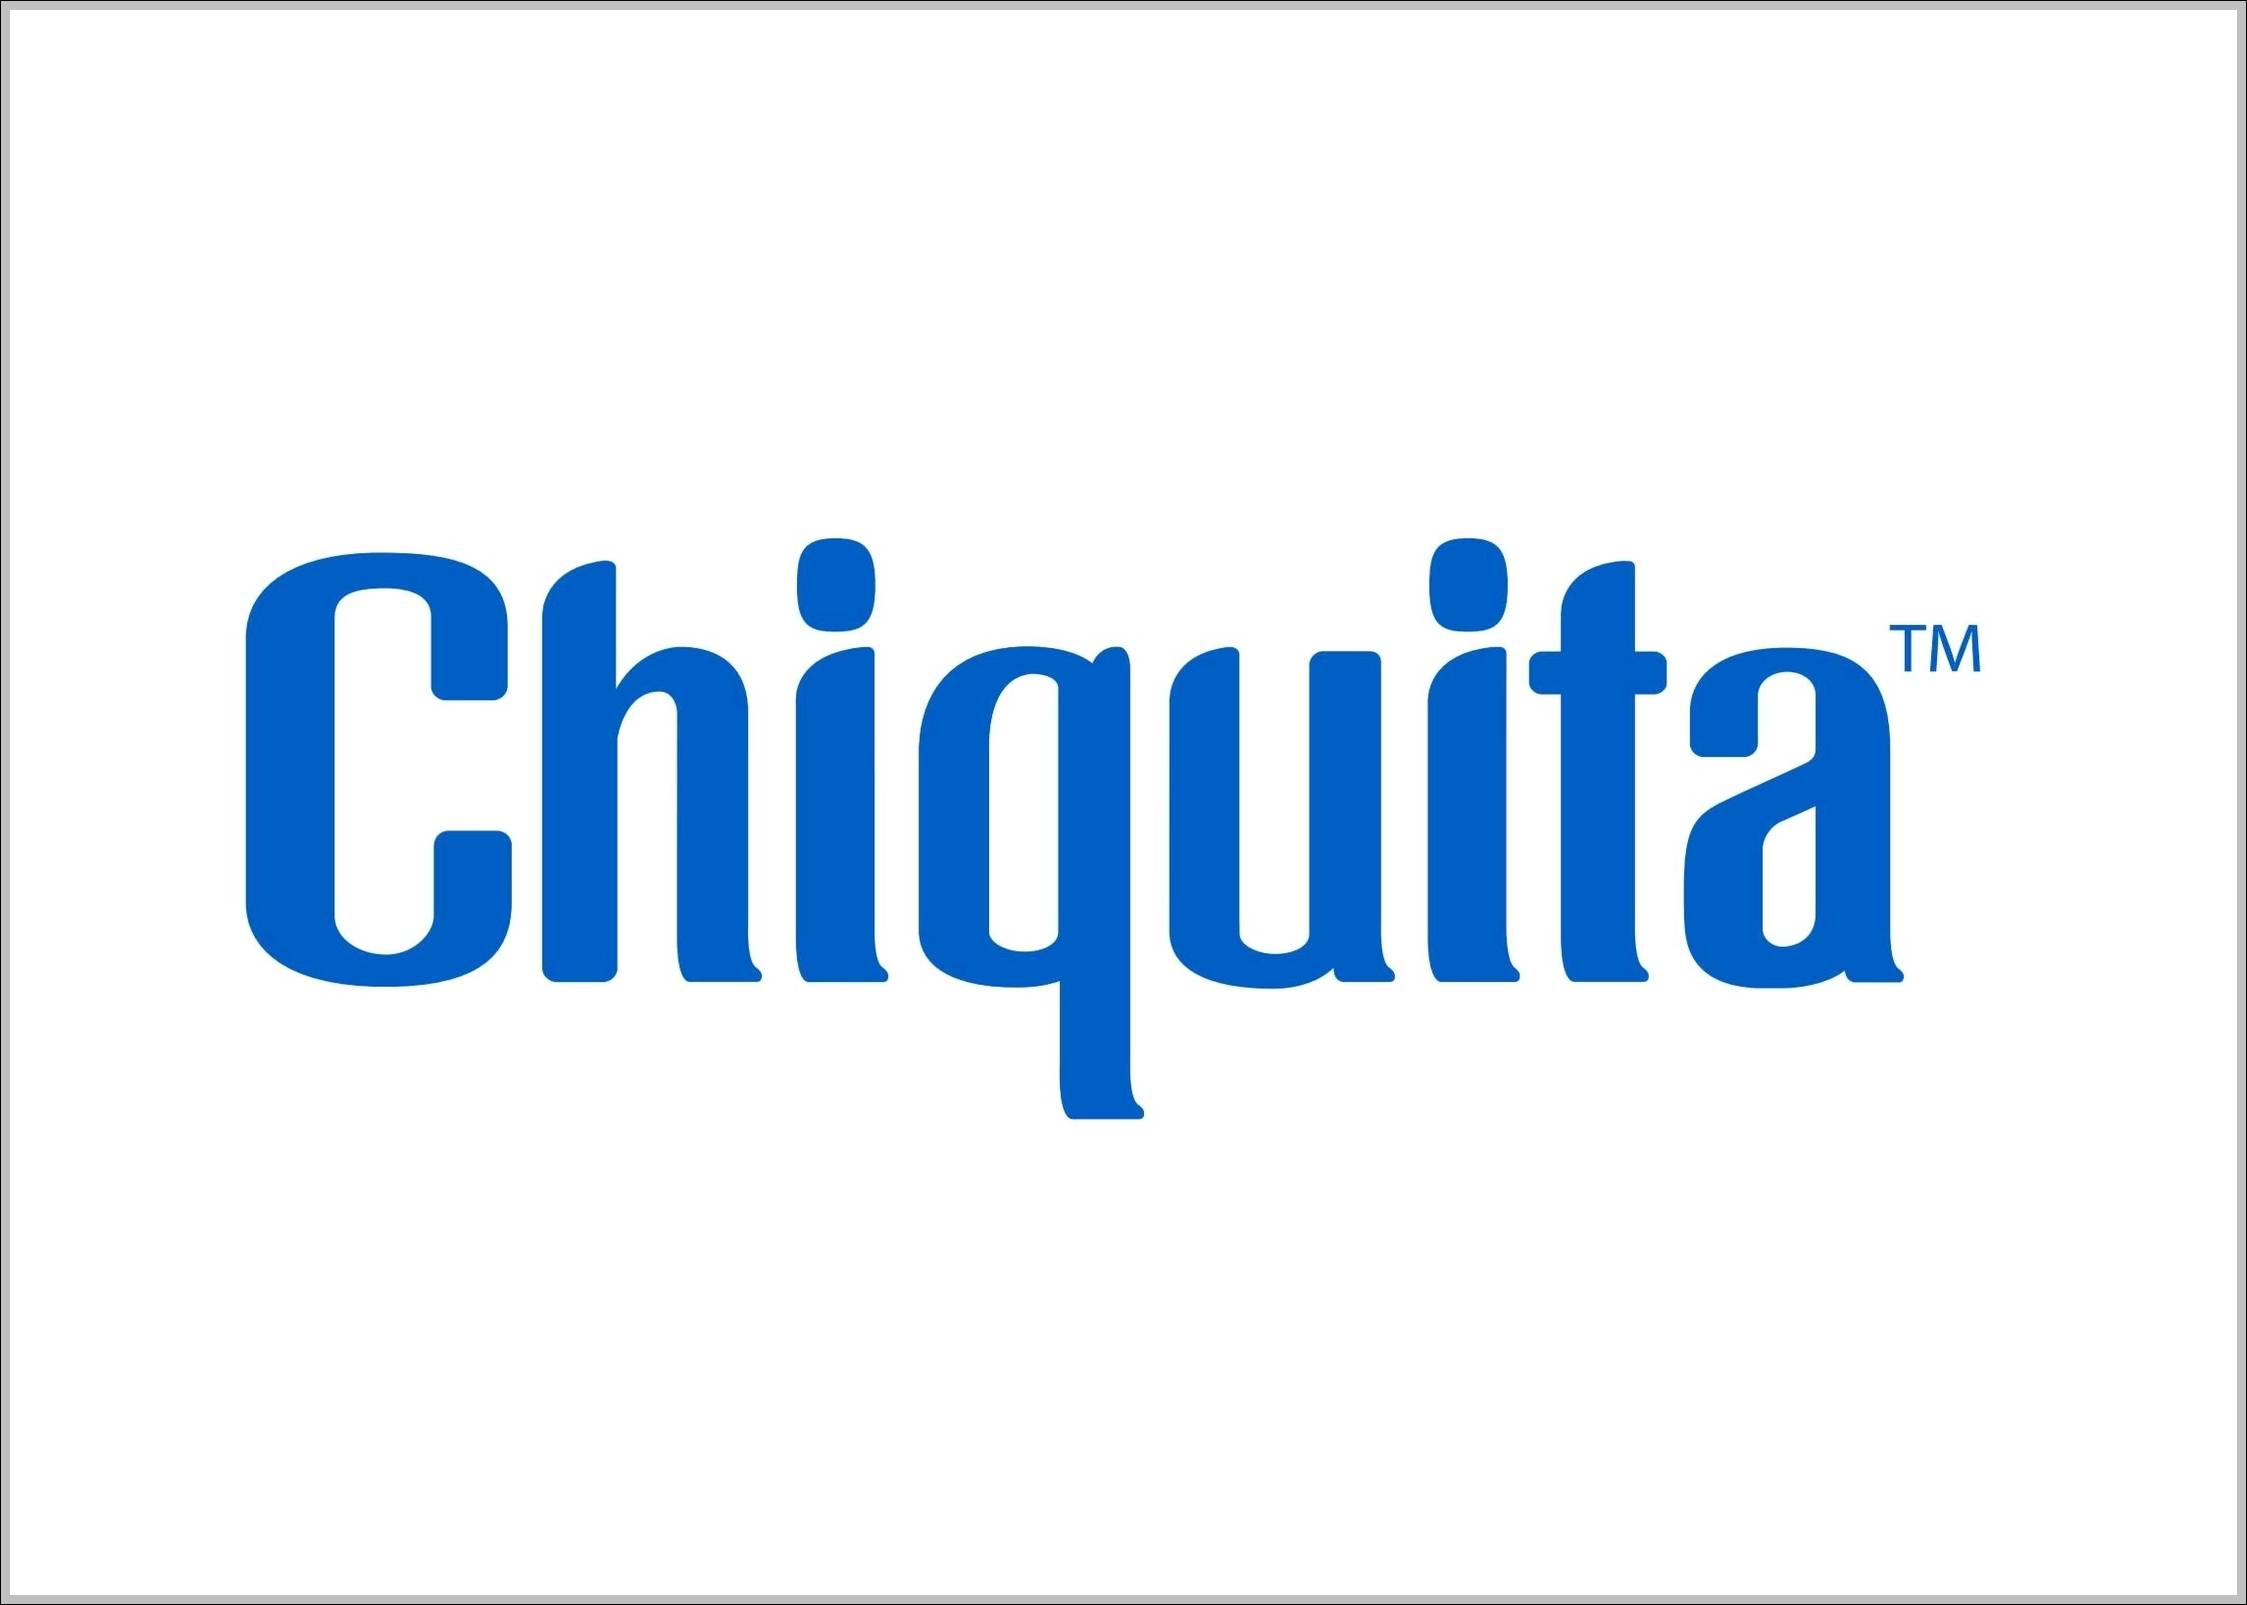 Chiquita Logo - Chiquita sign | Logo Sign - Logos, Signs, Symbols, Trademarks of ...